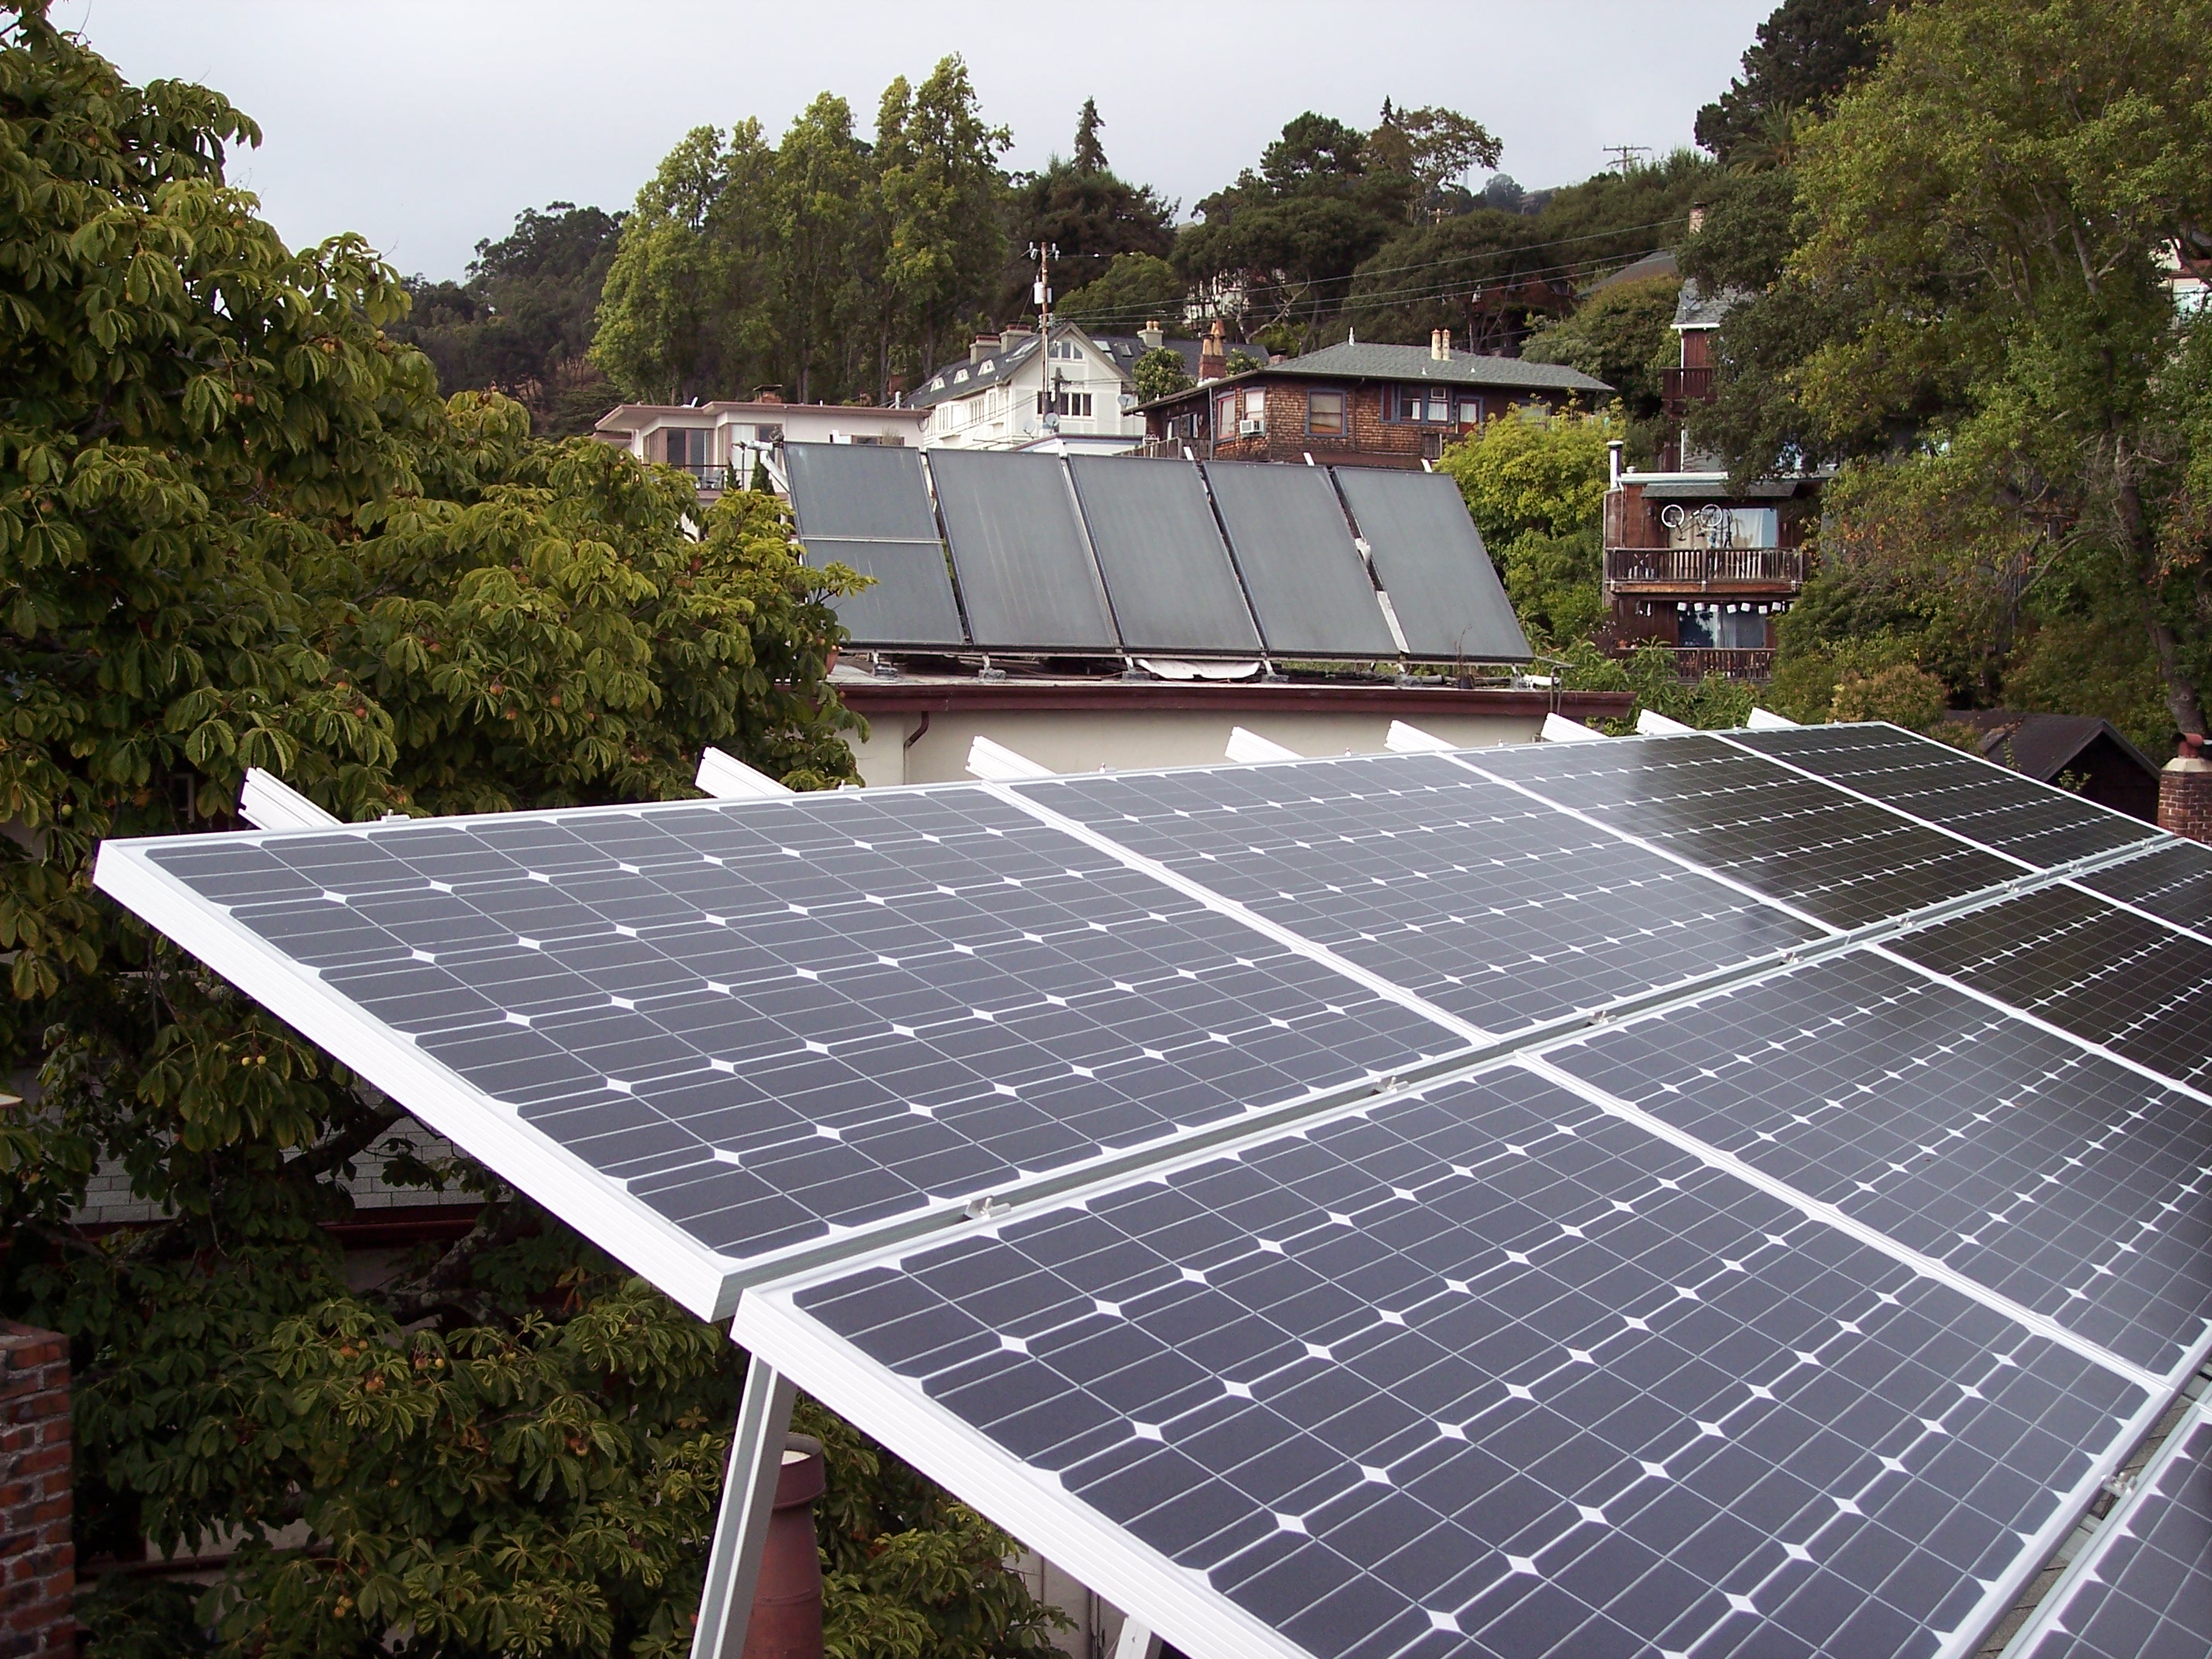 Solar power in California - Wikipedia